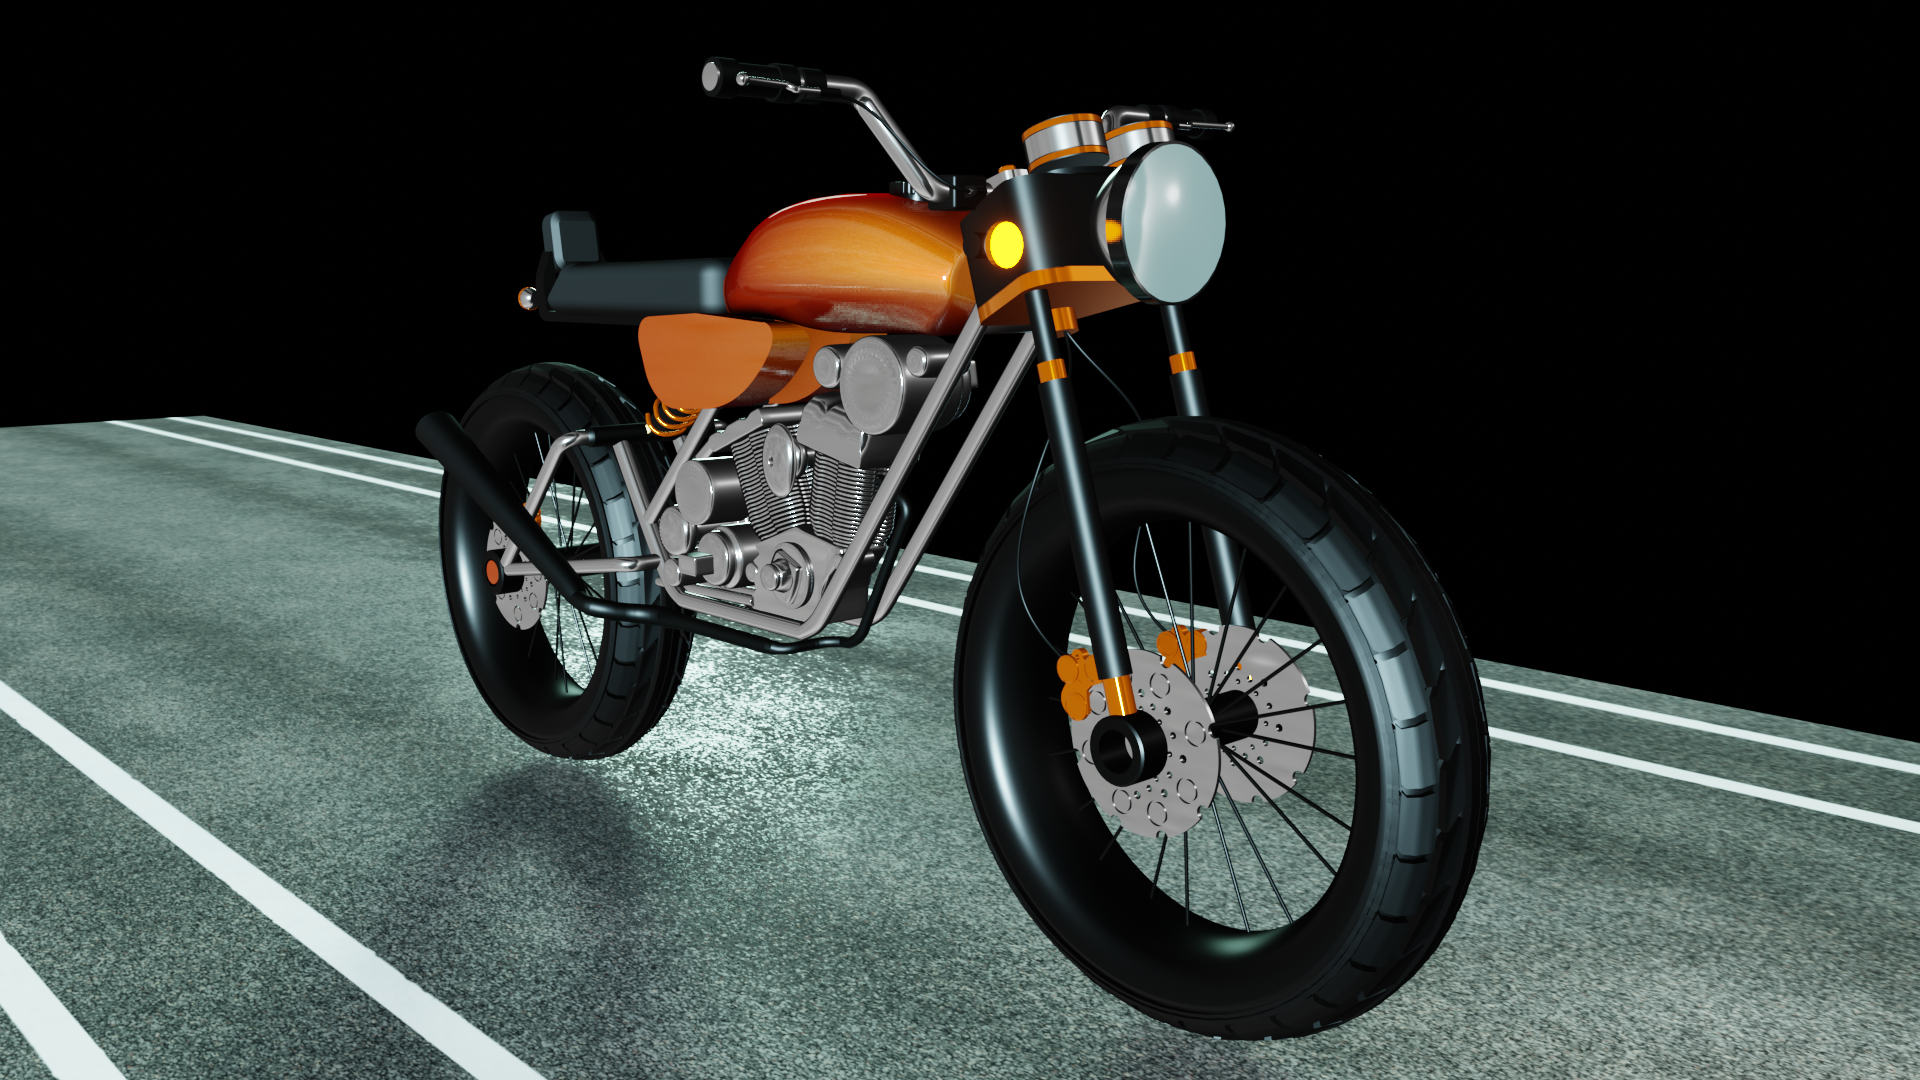 Motor Bike Classic preview image 1